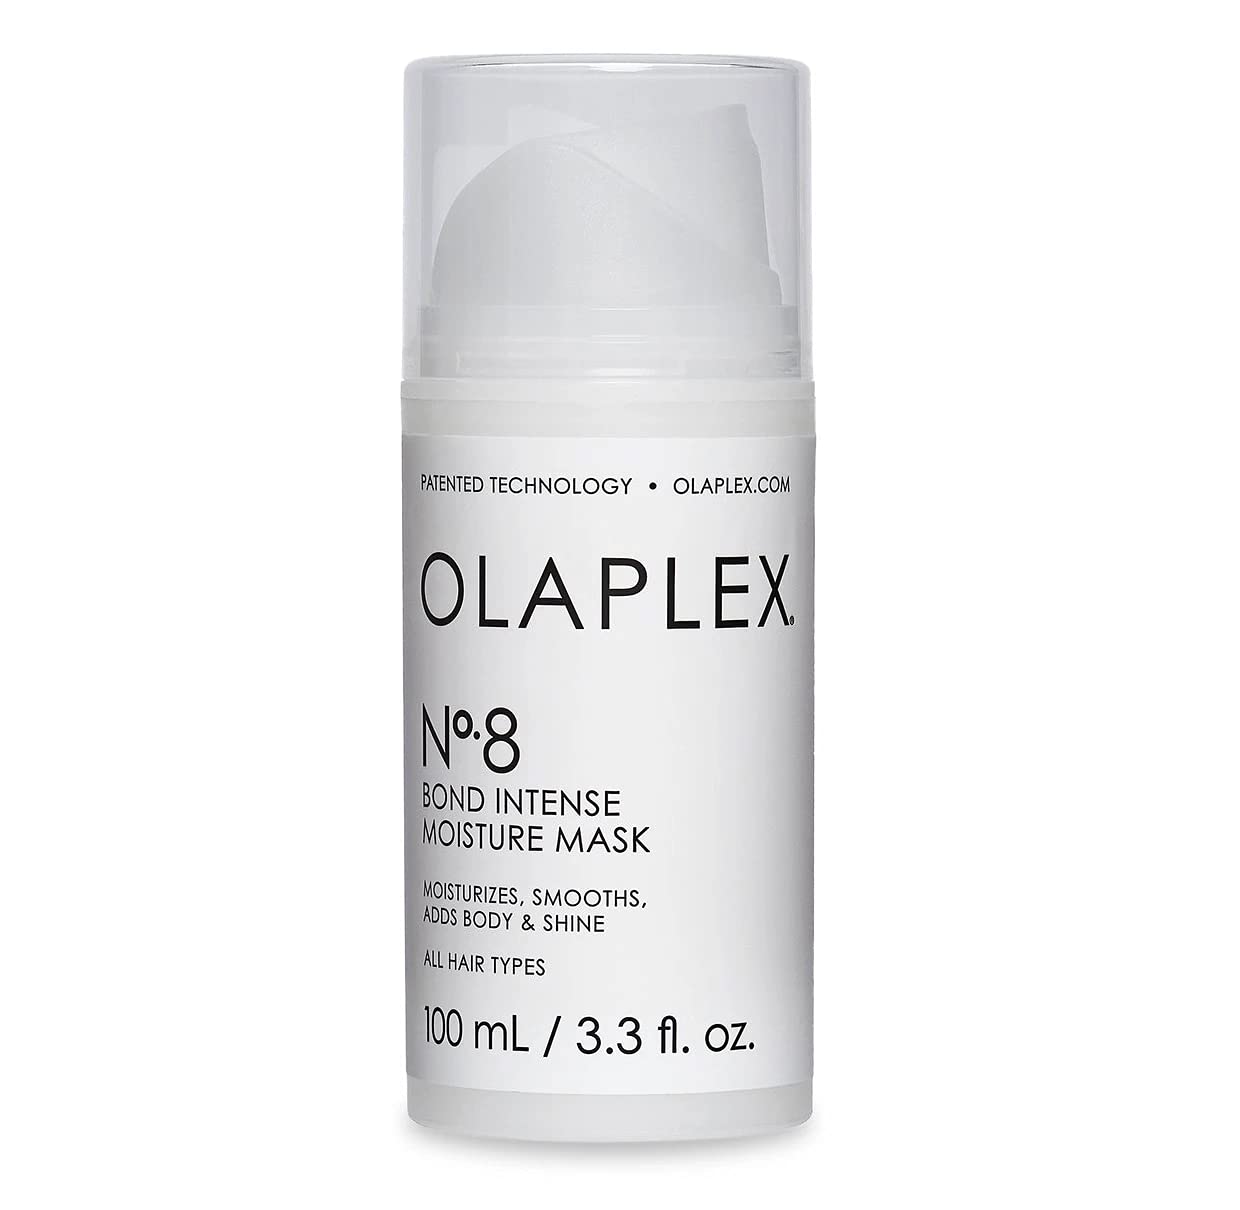 Olaplex No. 8 Bond Intense Moisture Mask, 3.3 fl. : Beauty & Personal Care - Brilliance New York Online